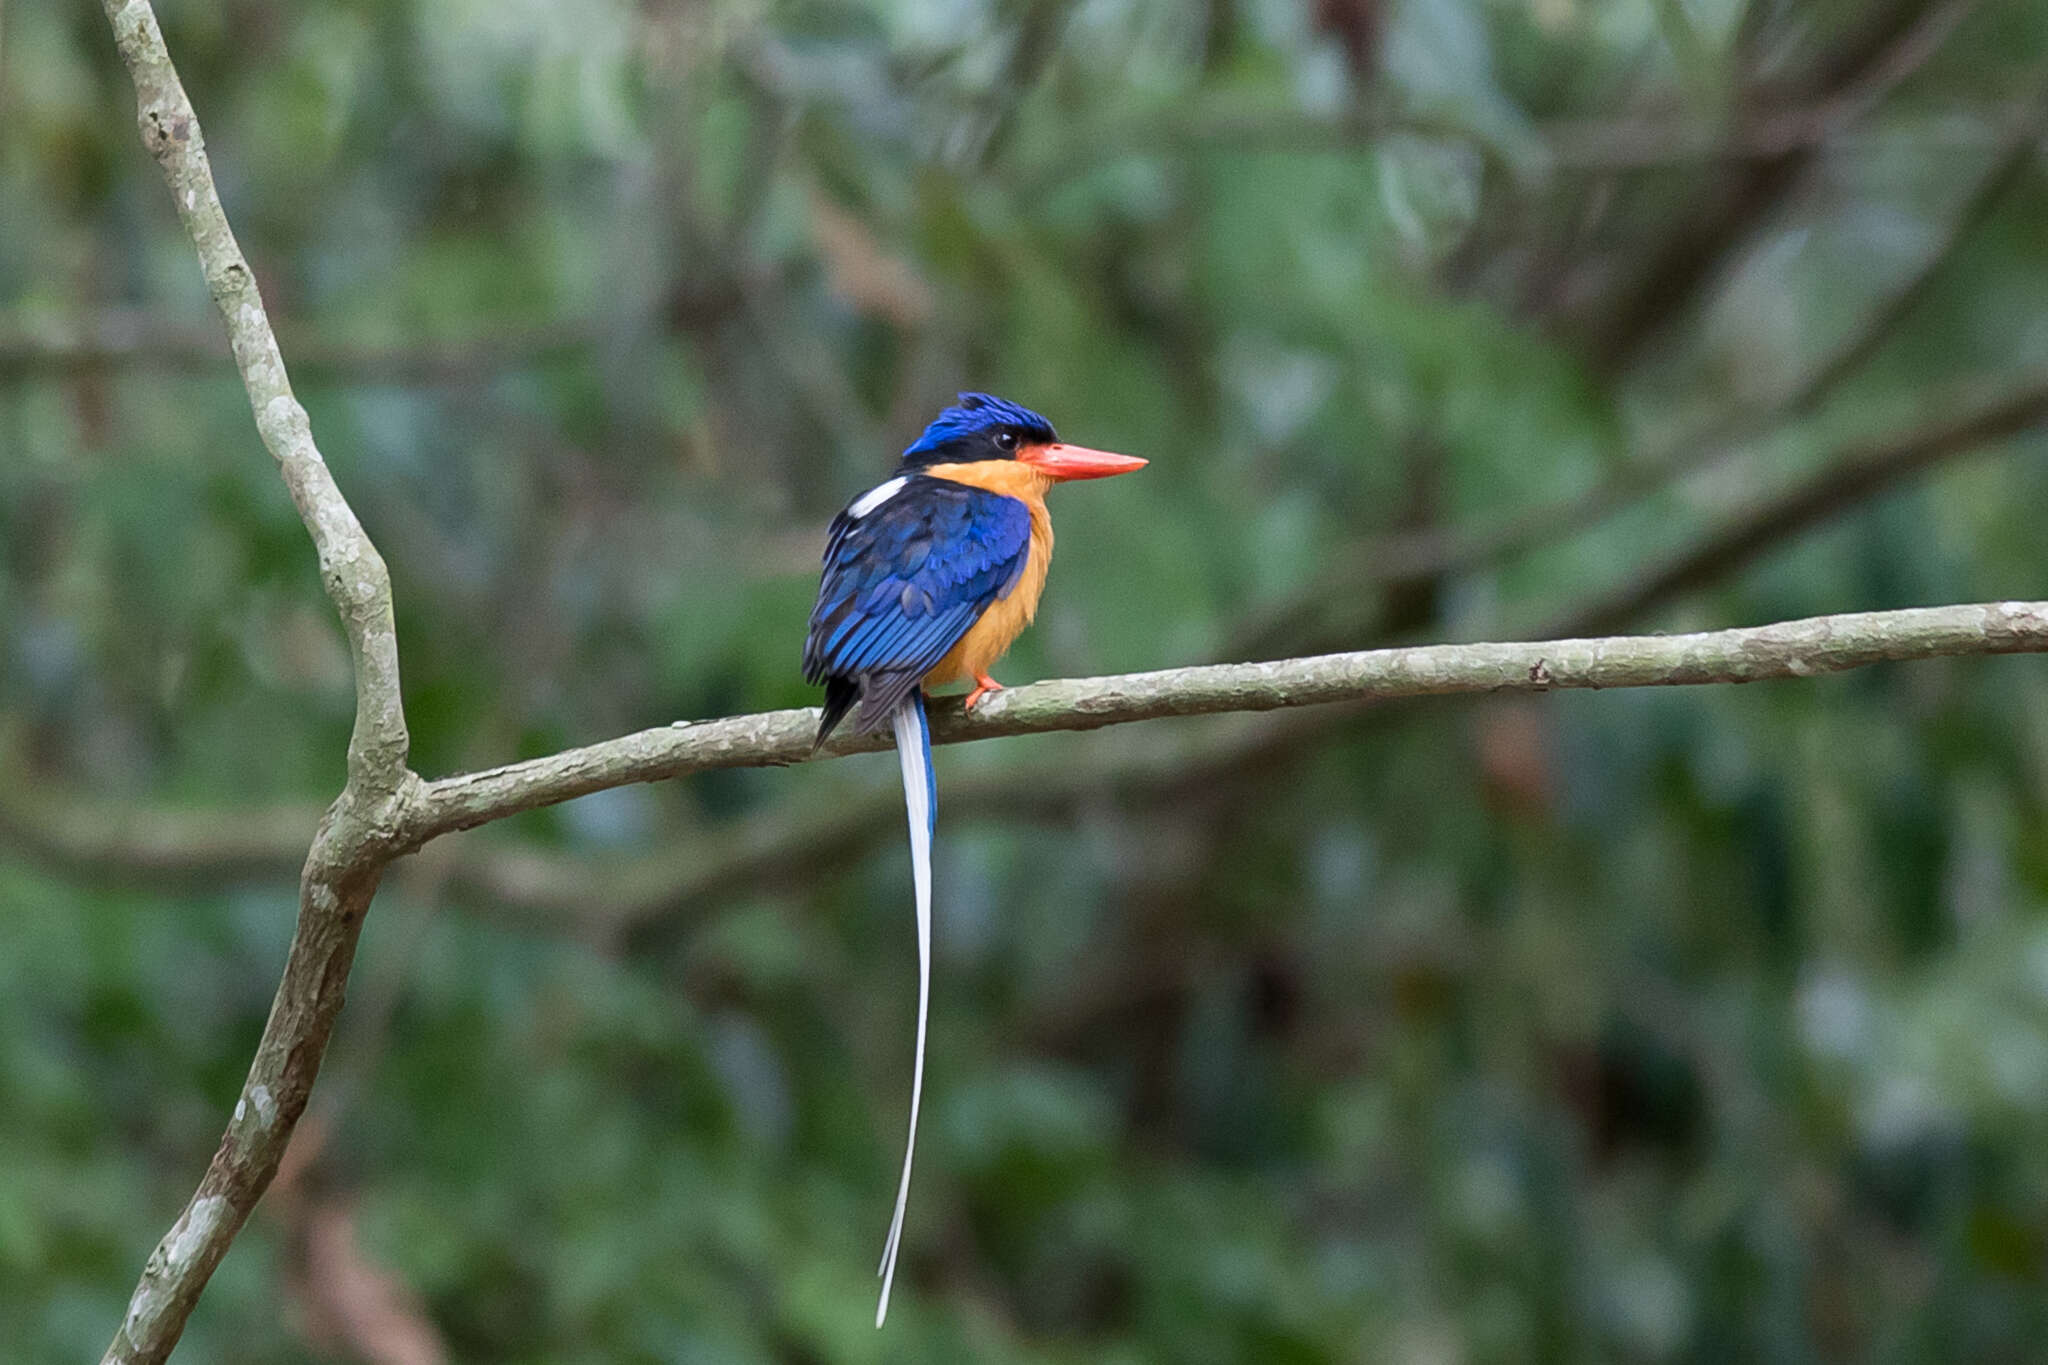 Image of Buff-breasted Paradise Kingfisher